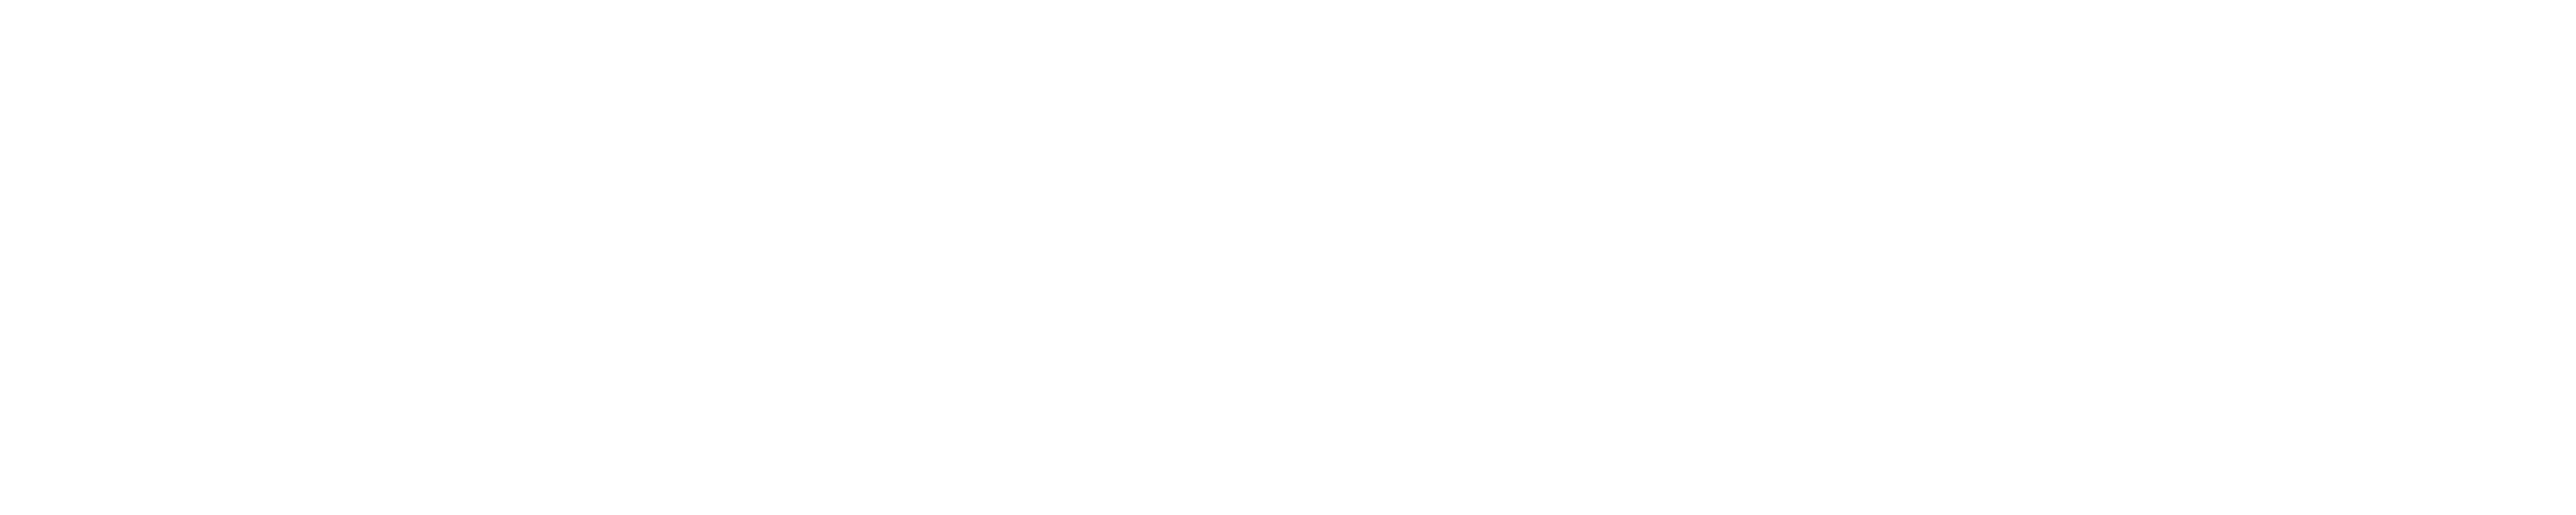 52 Alliance Logo-5